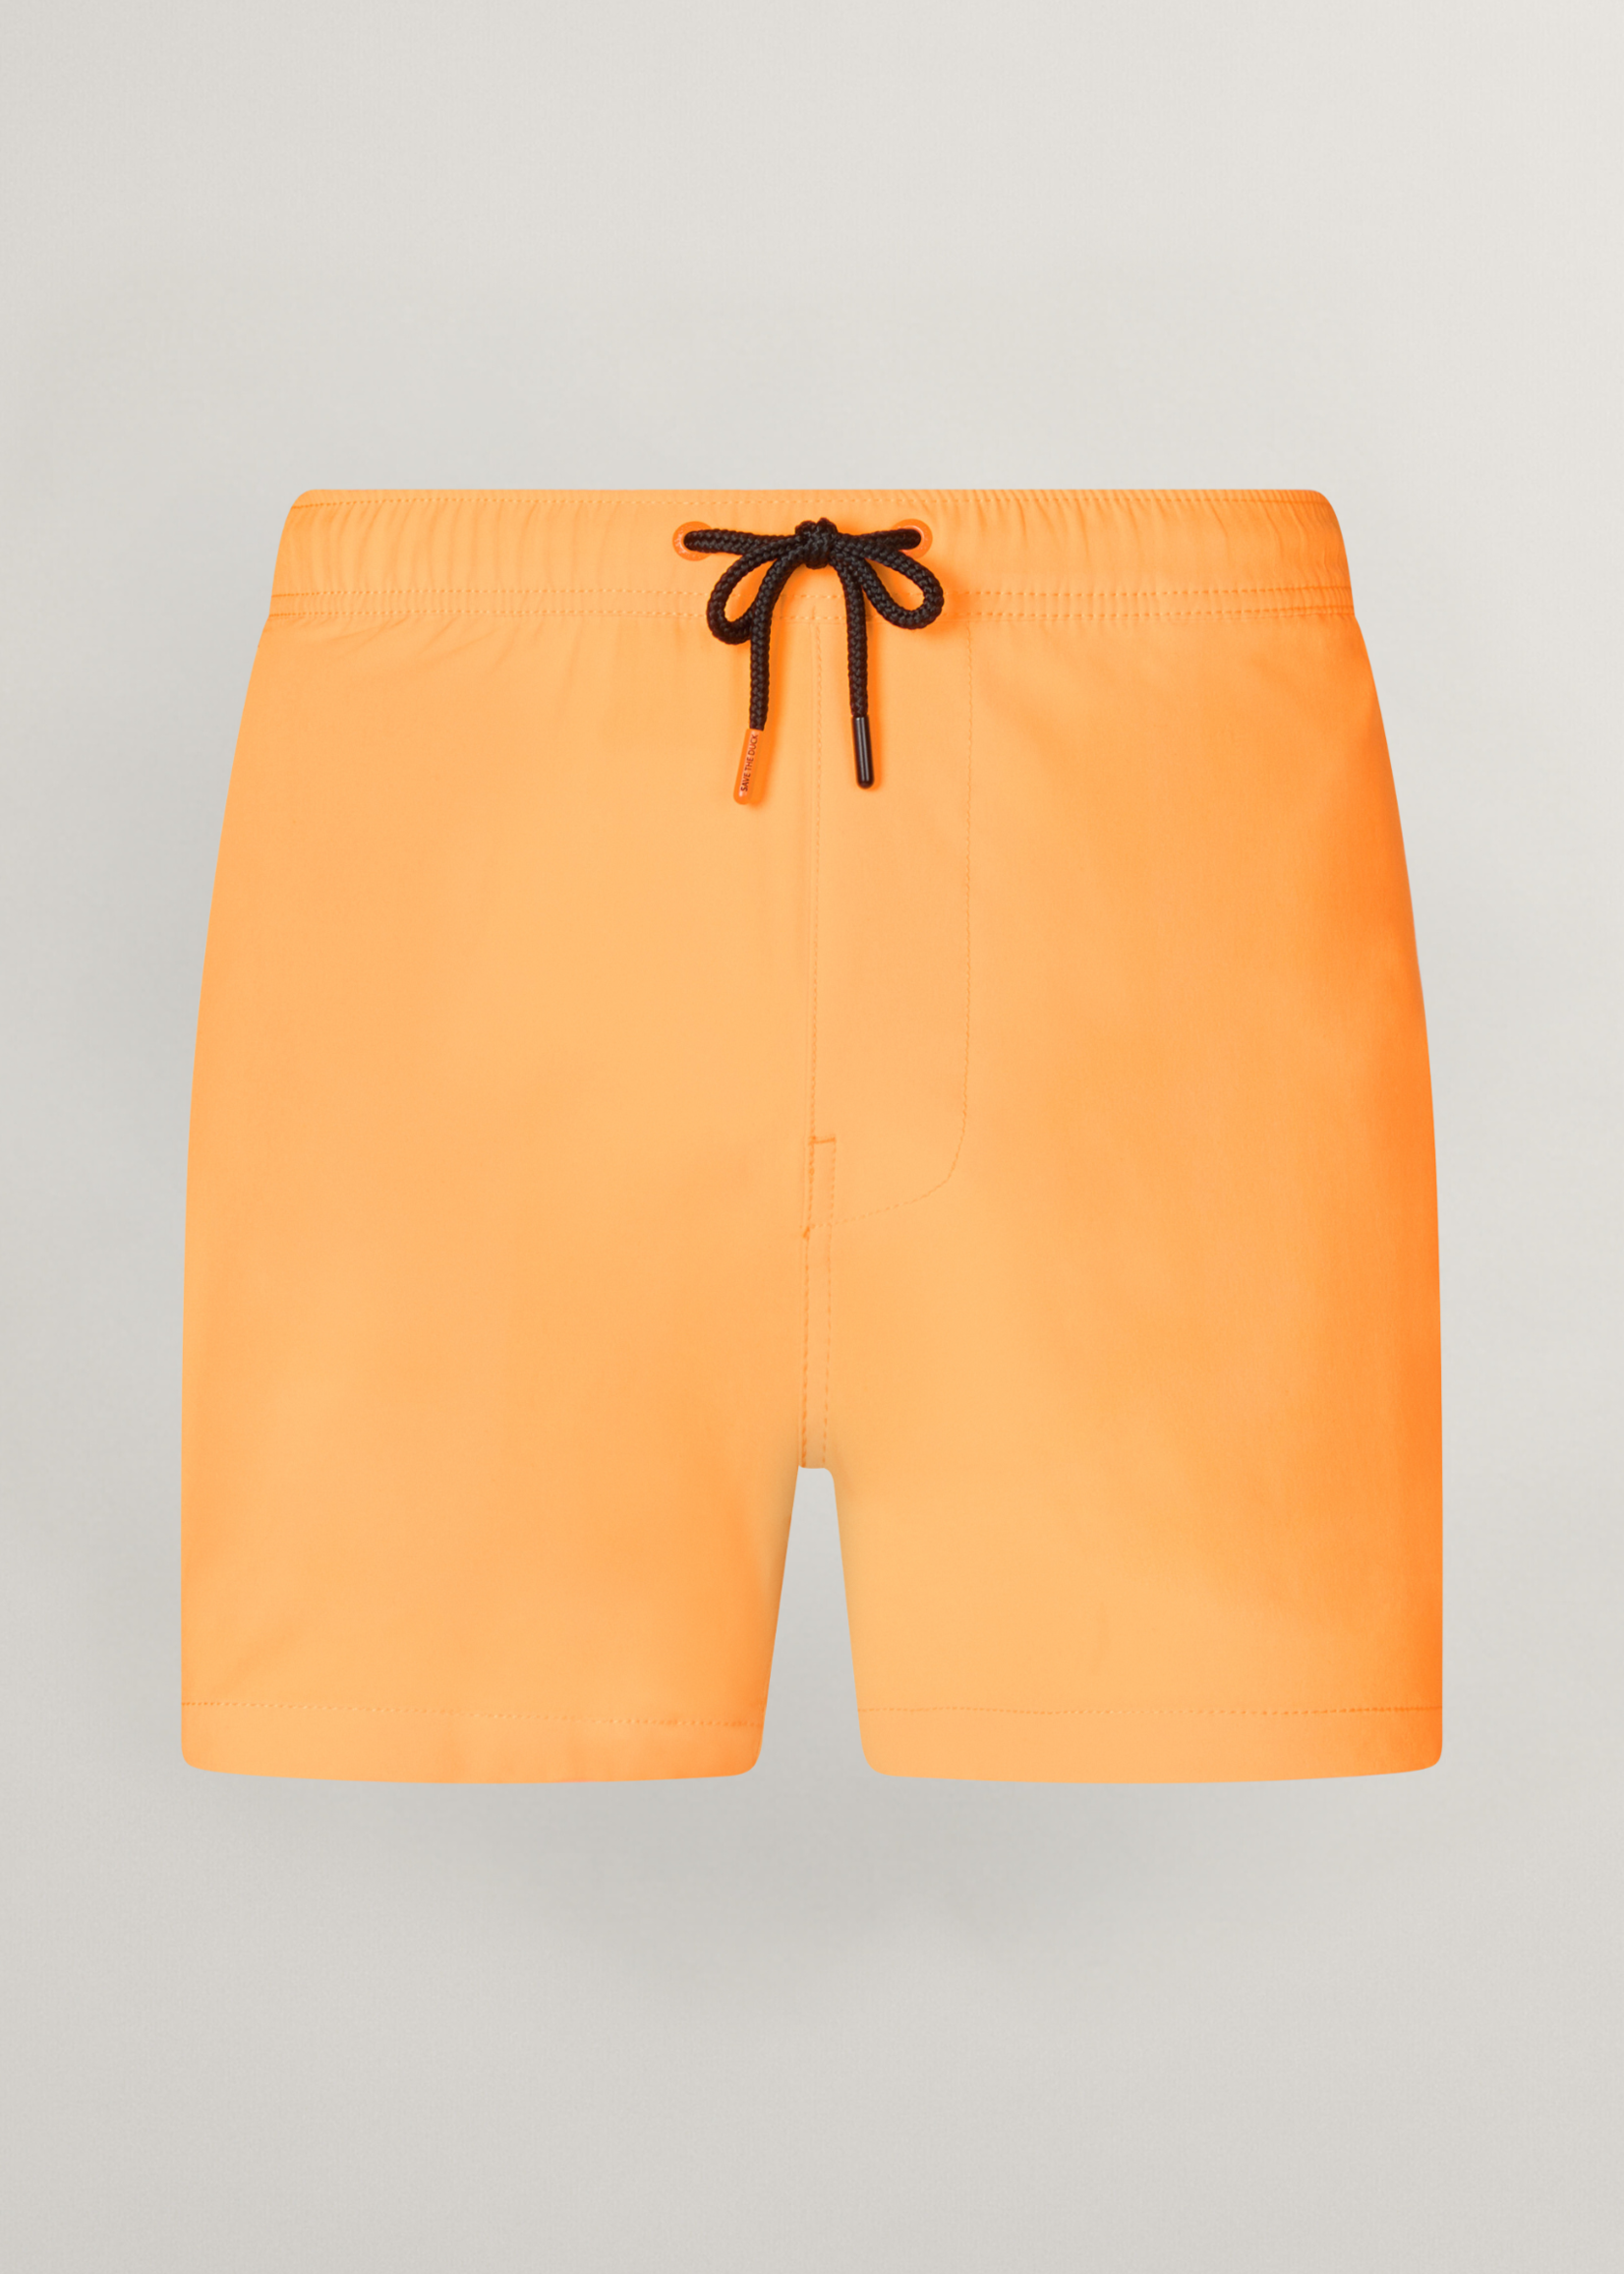 SAVE THE DUCK DEMNA swimwear - Fluo Orange